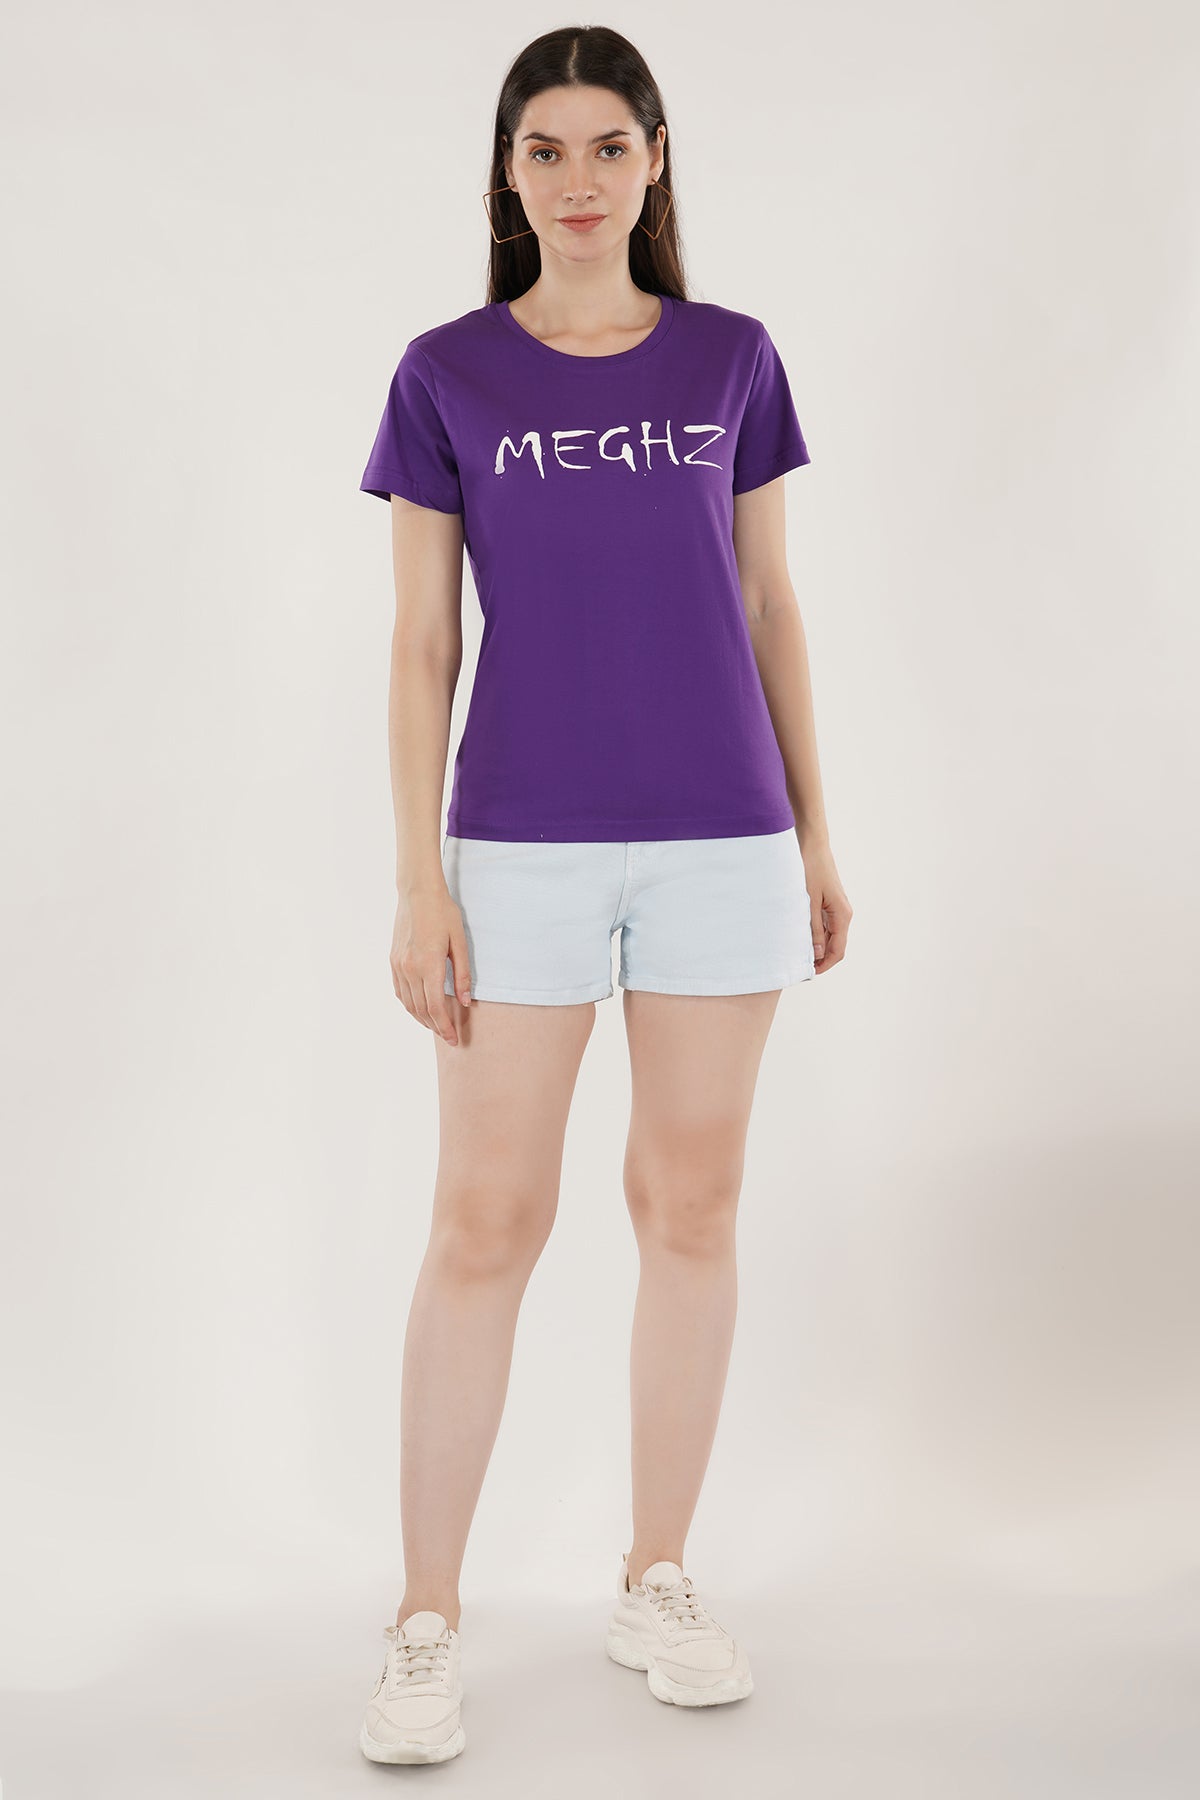 Women Round Neck Purple T-Shirt